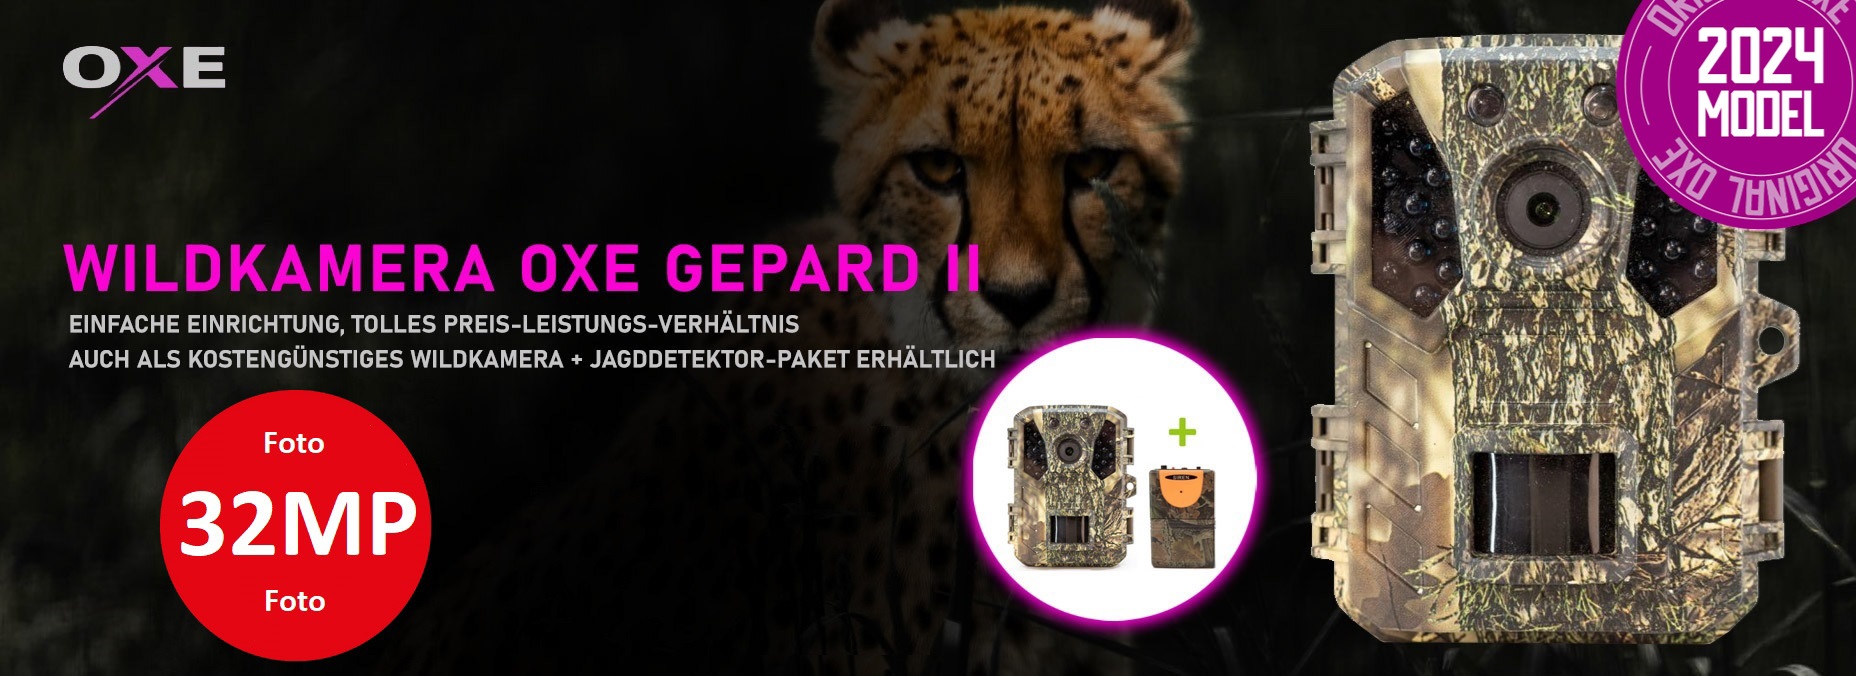 Wildkamera OXE Gepard II